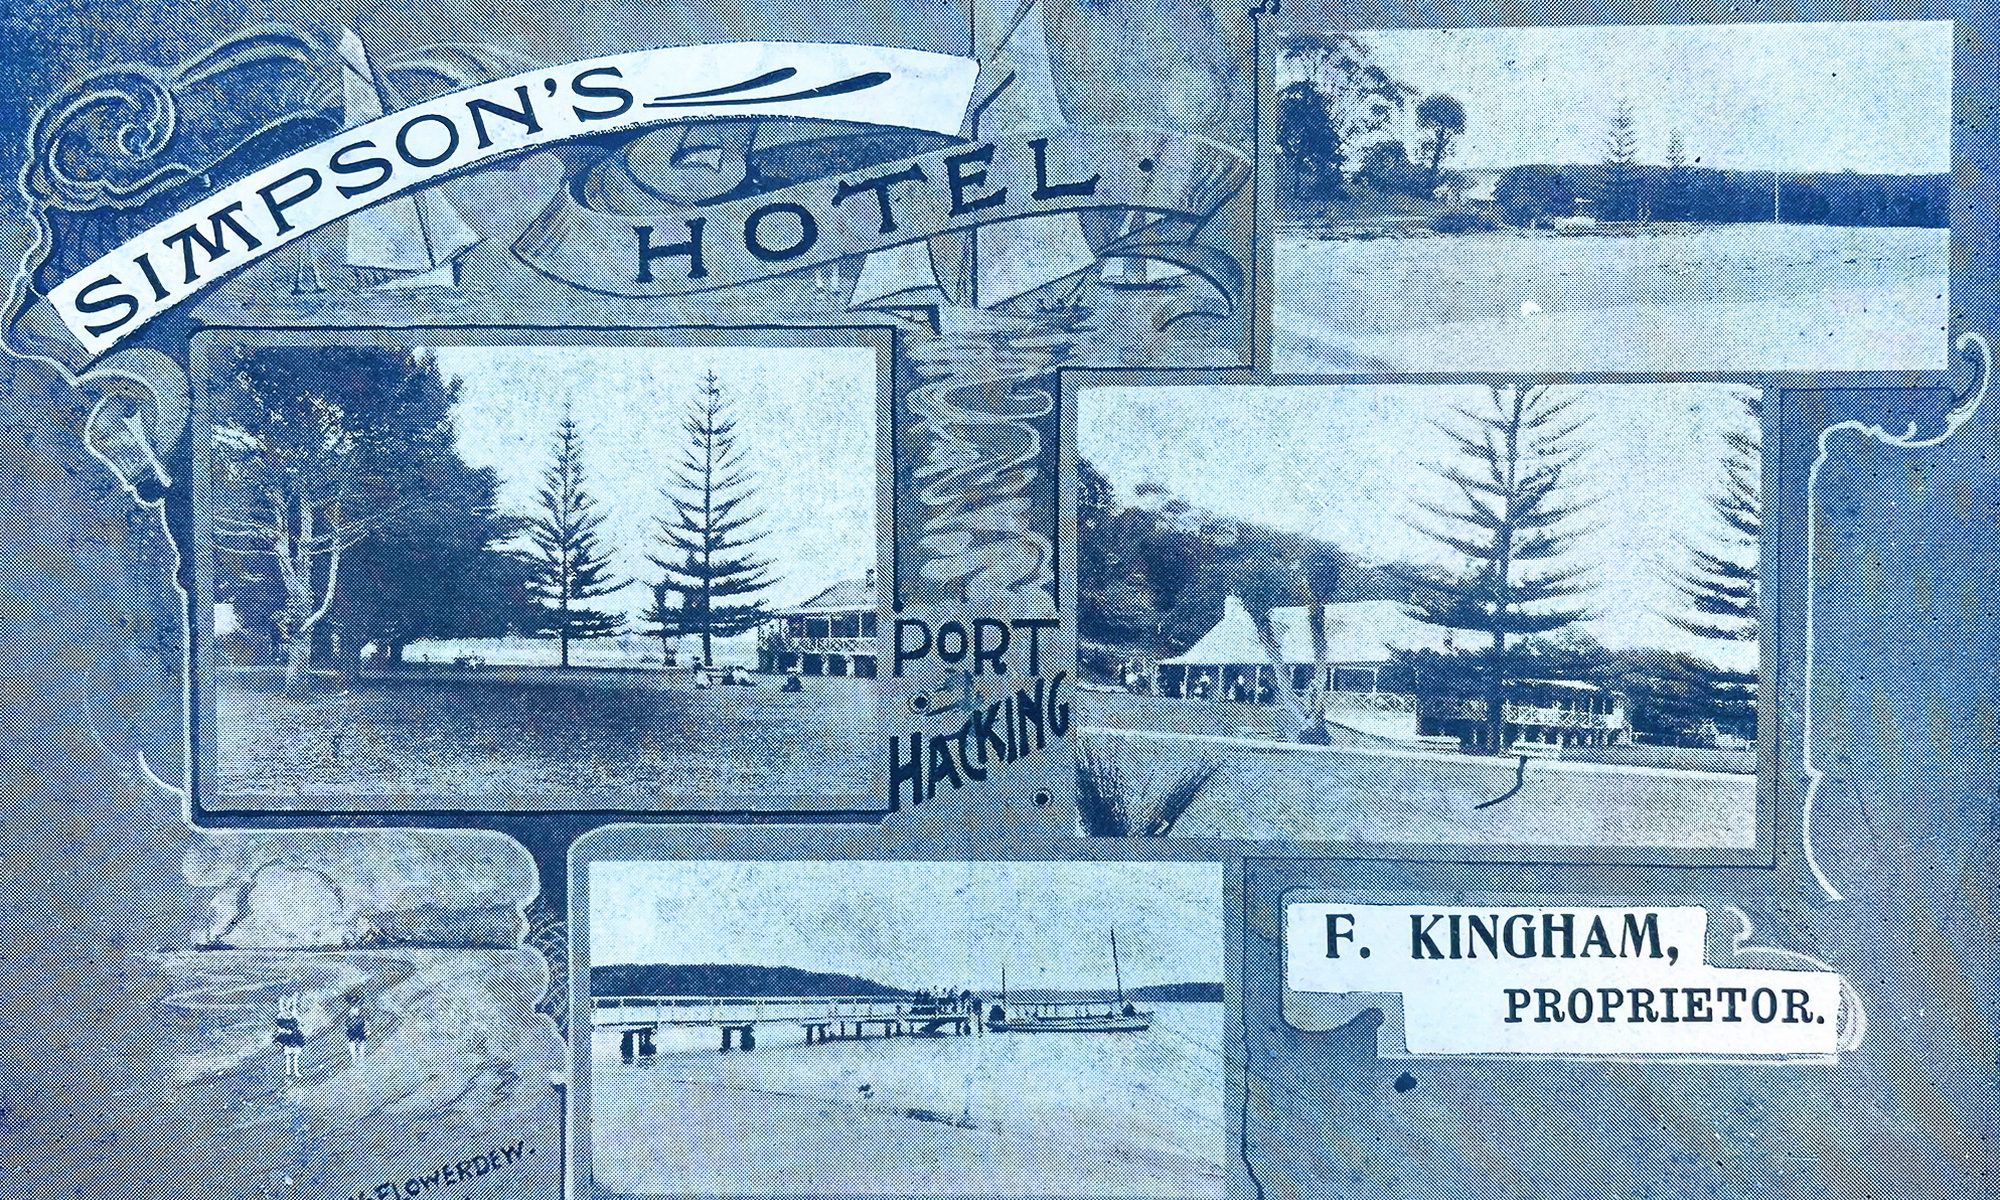 Simpson's Hotel History Postcard